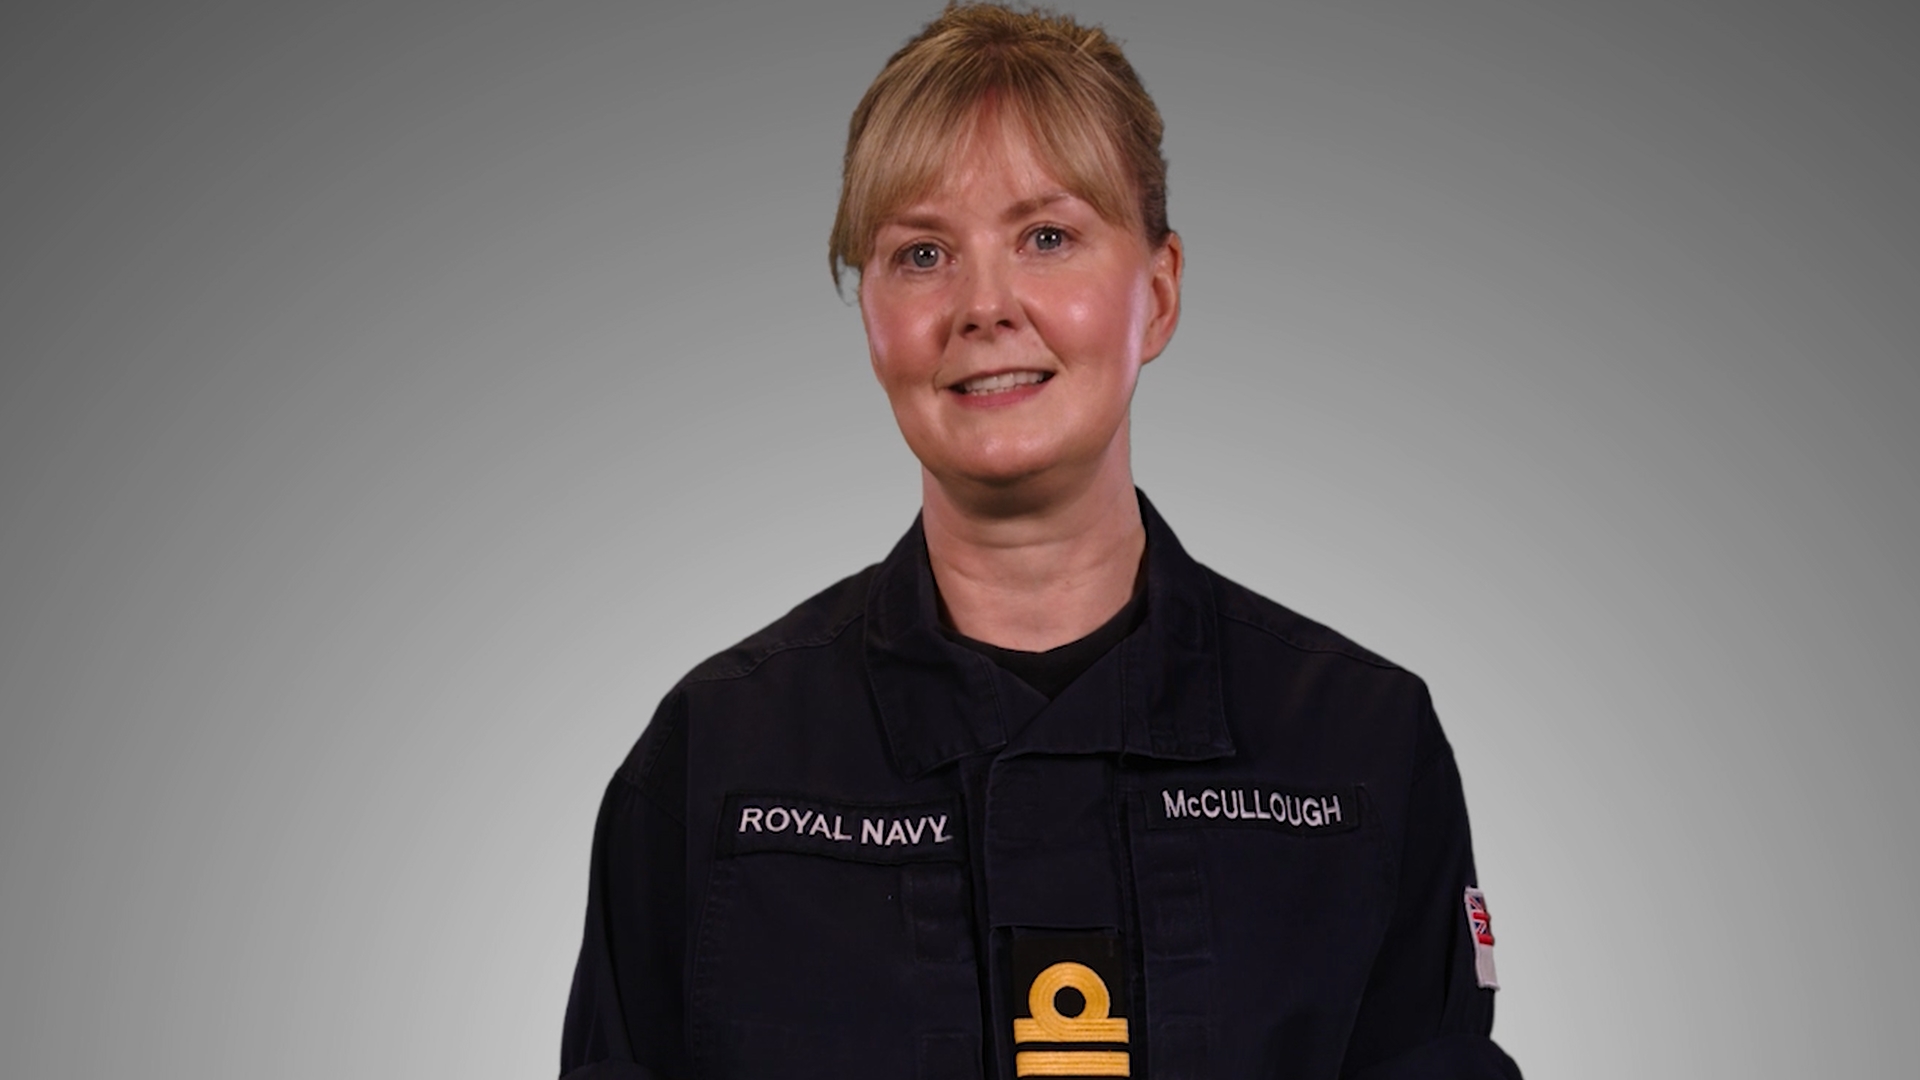 Karen McCullough in Navy uniform